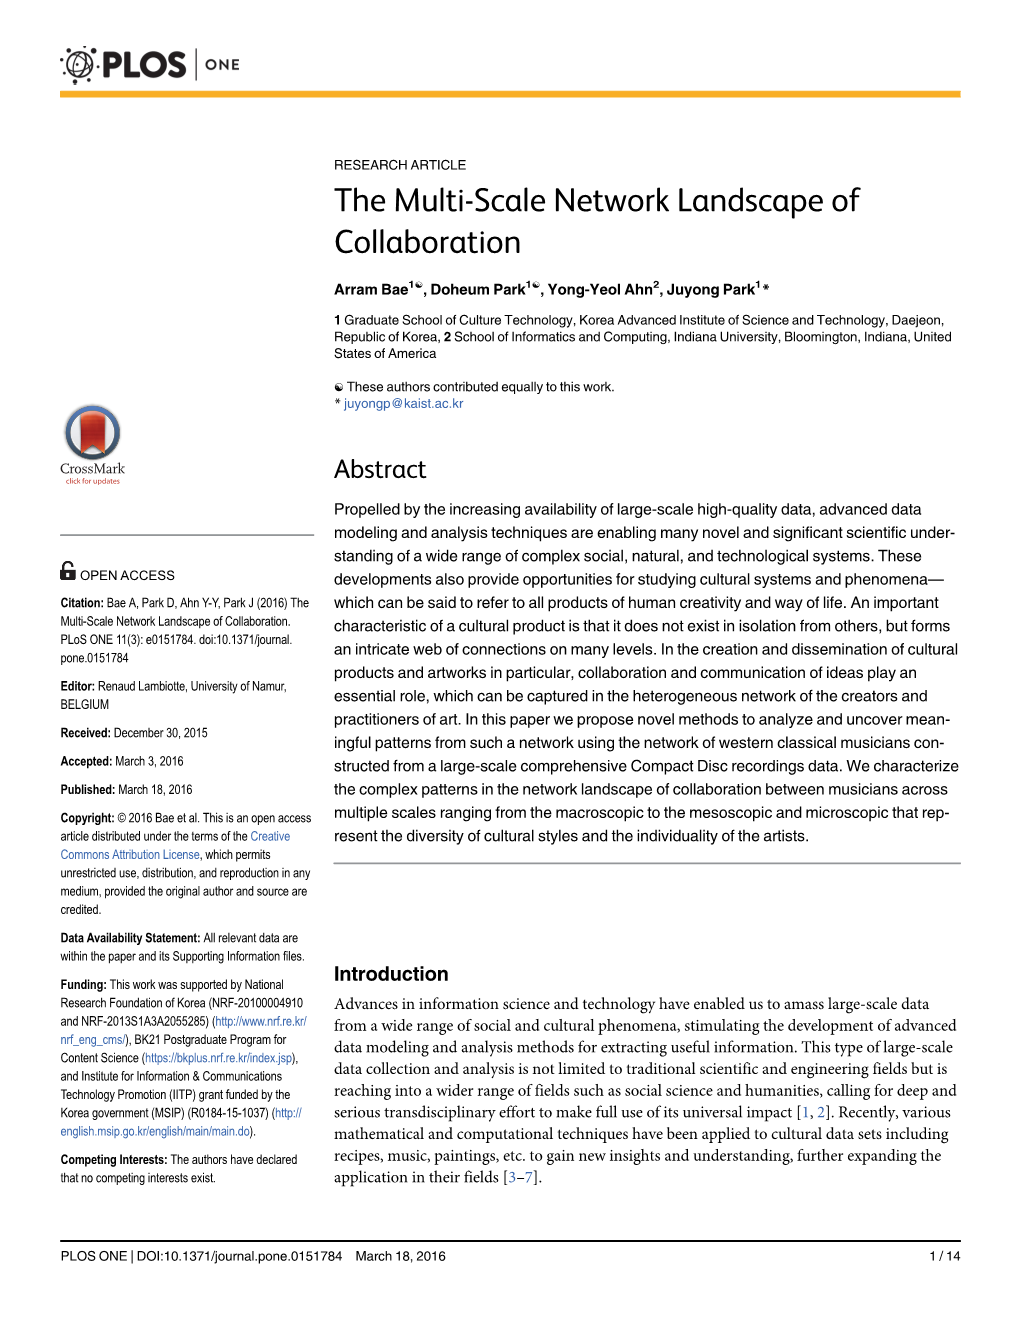 The Multi-Scale Network Landscape of Collaboration